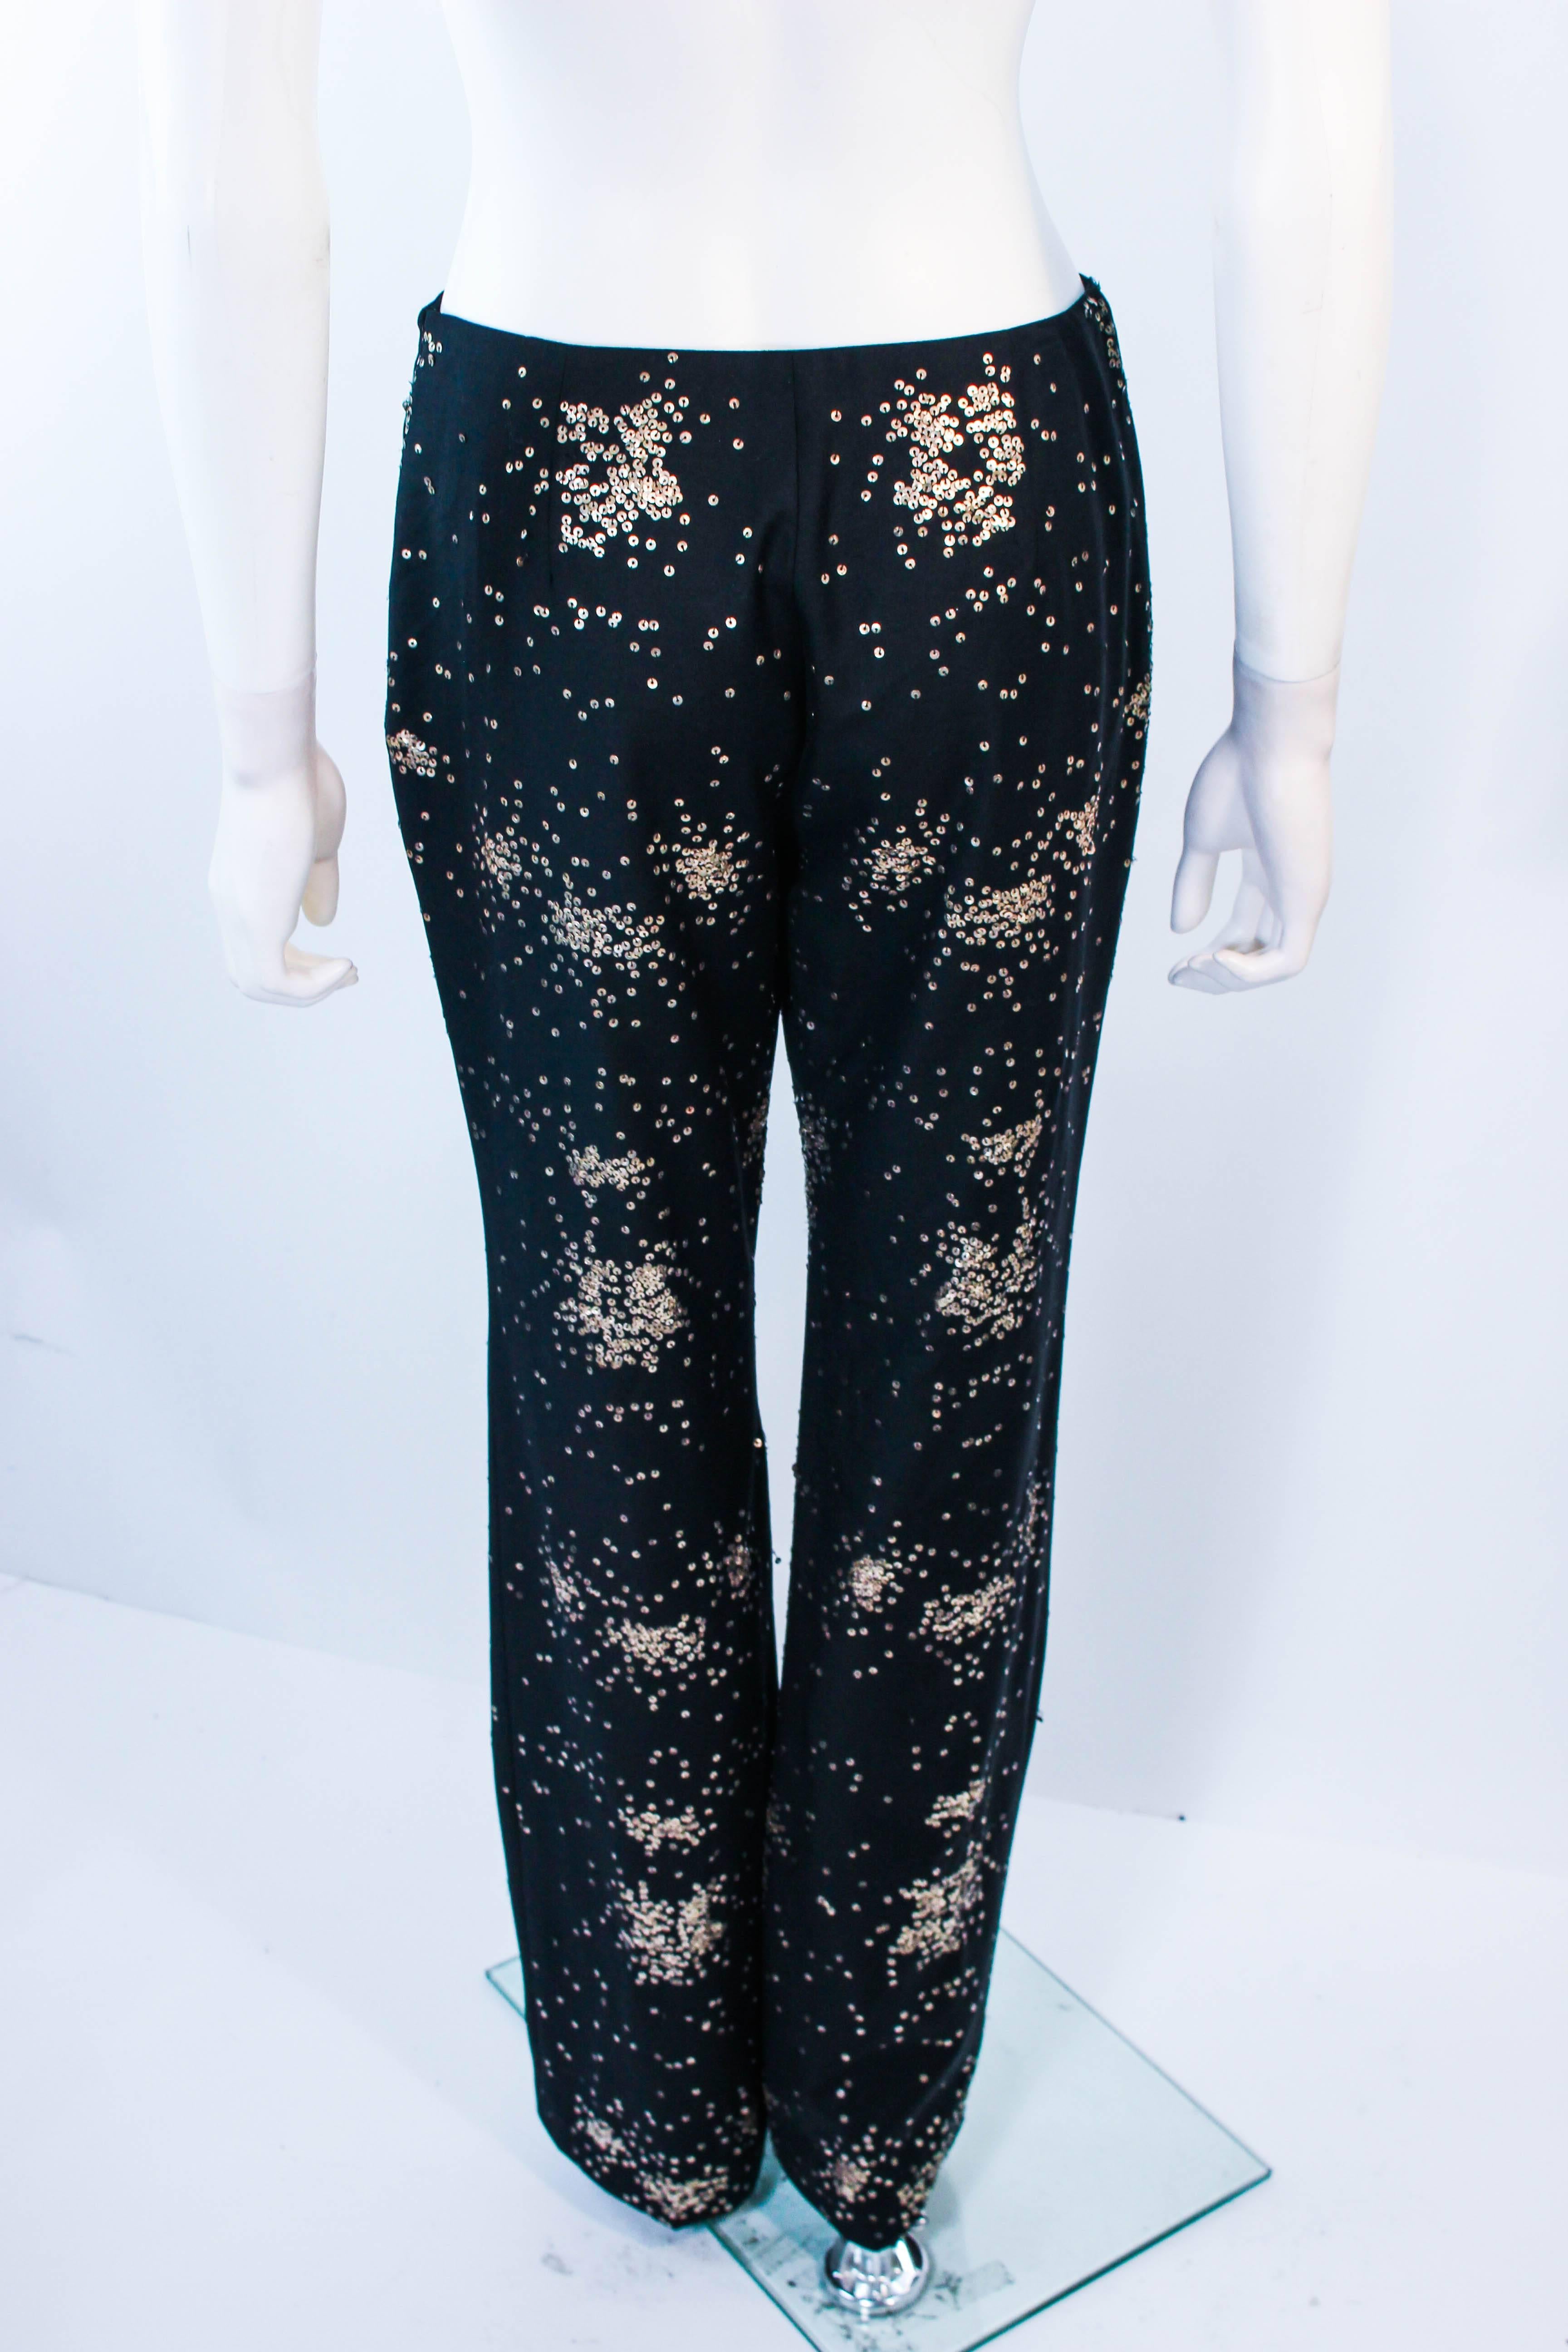 OZBEK Ultra Black Pants with Metal Sequin Applique Size 4 6 5